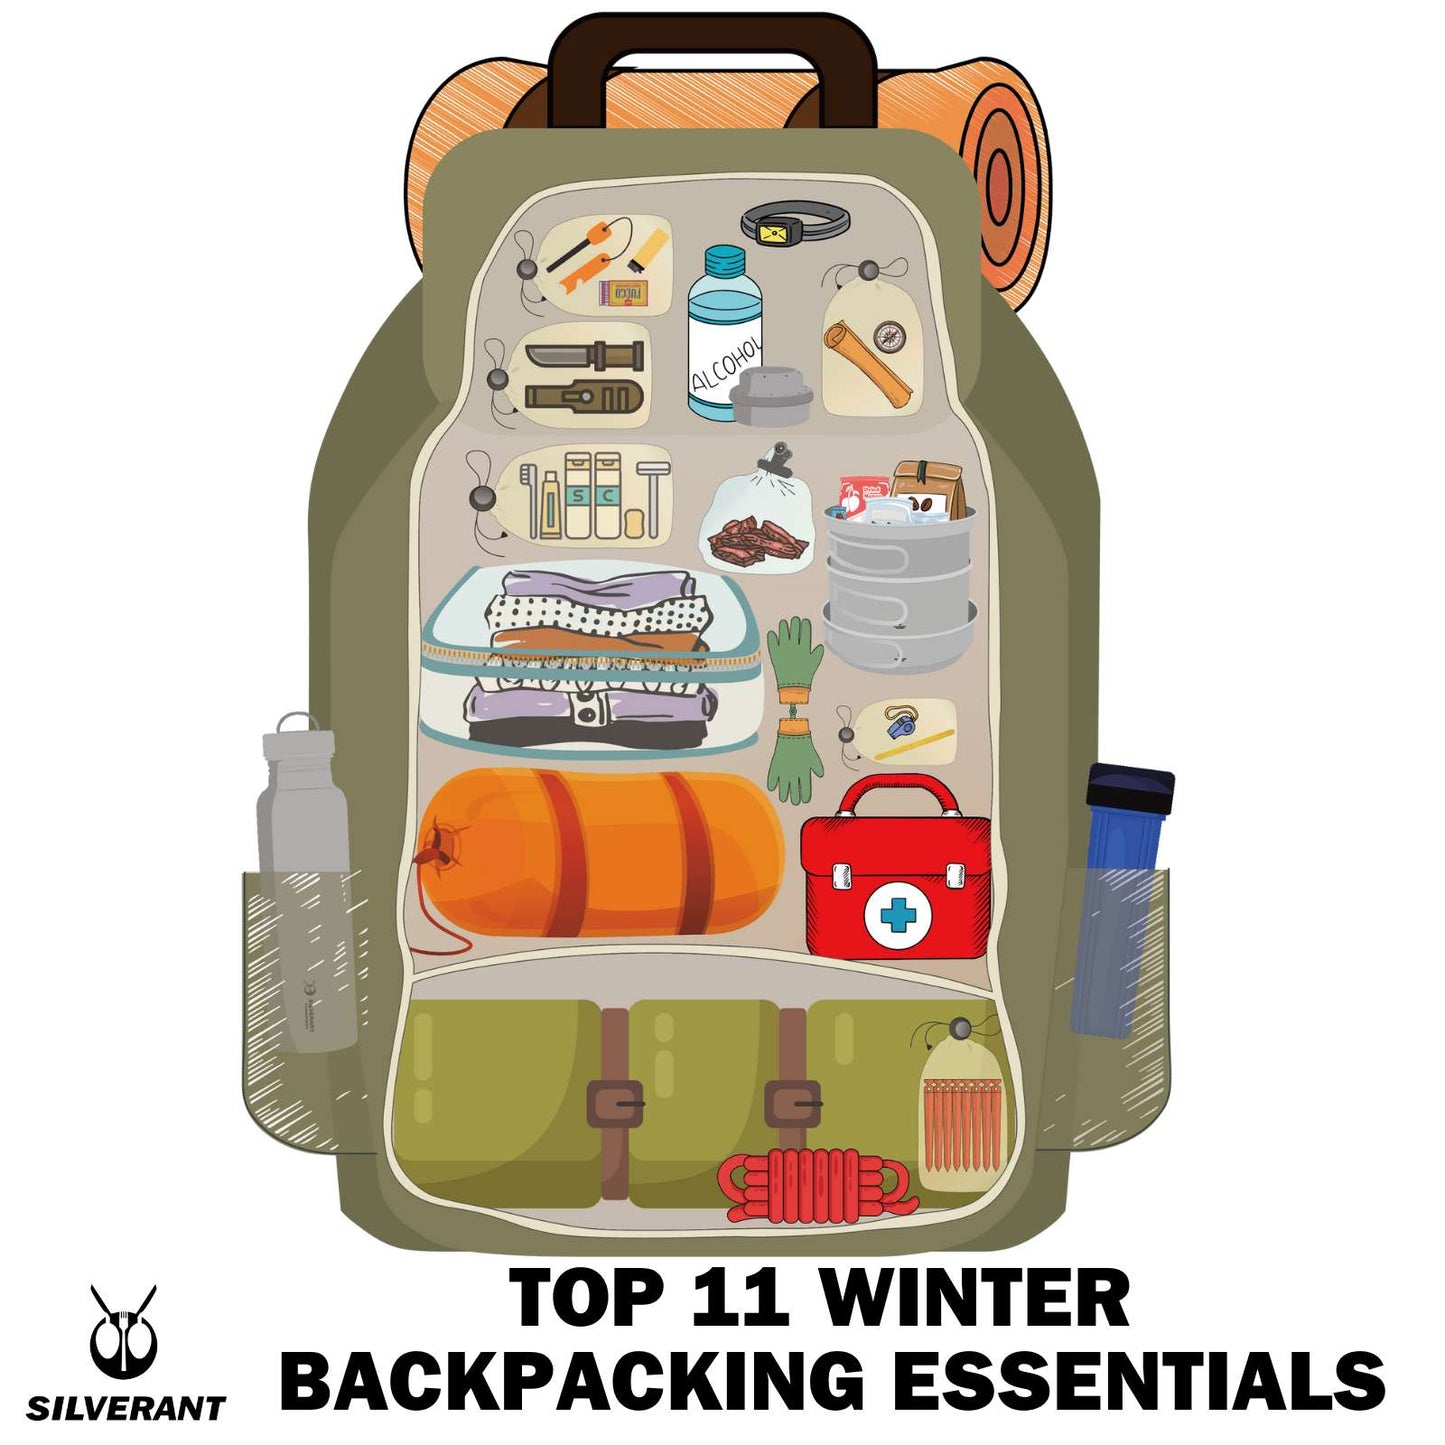 Top 11 Winter Backpacking Essentials